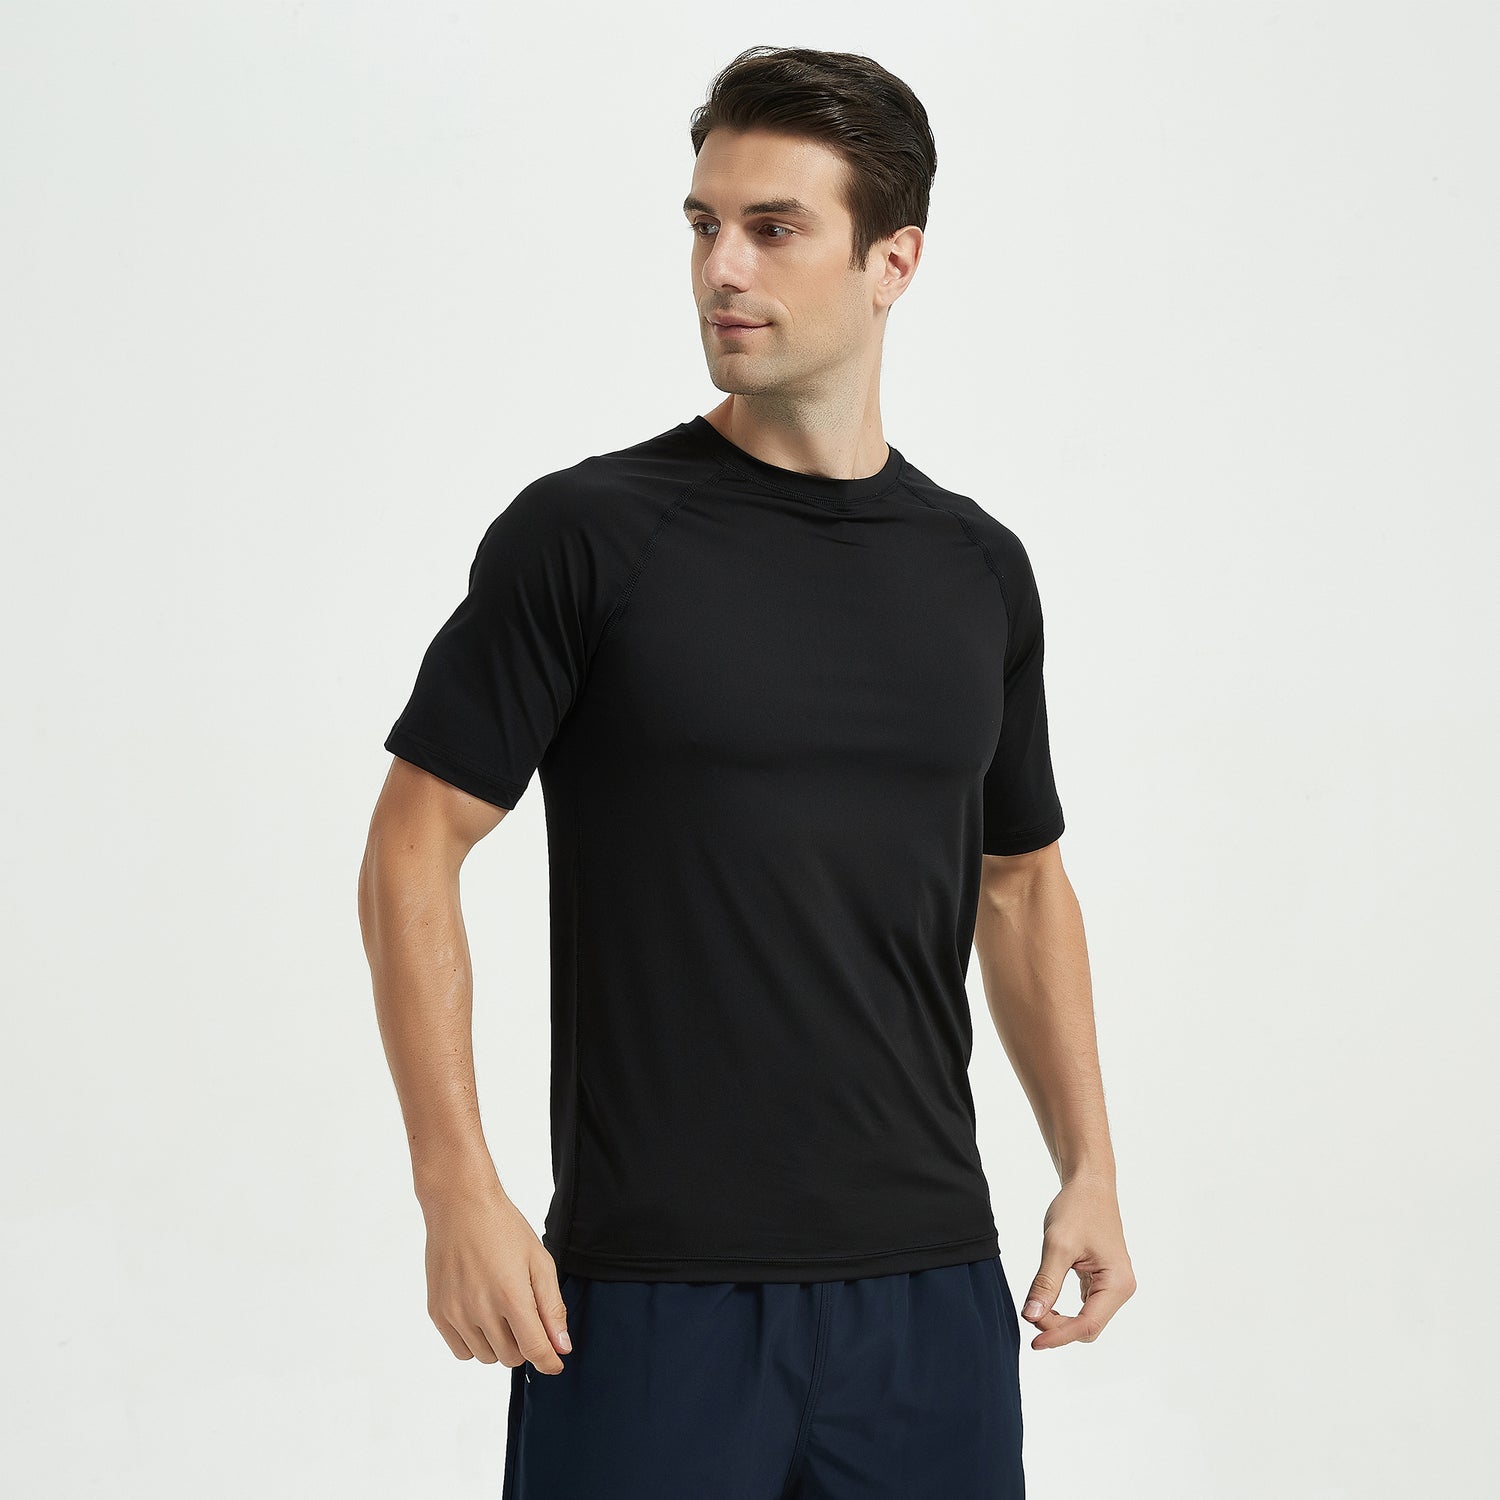 Graphene G-Tech T-Shirt – Wear Graphene